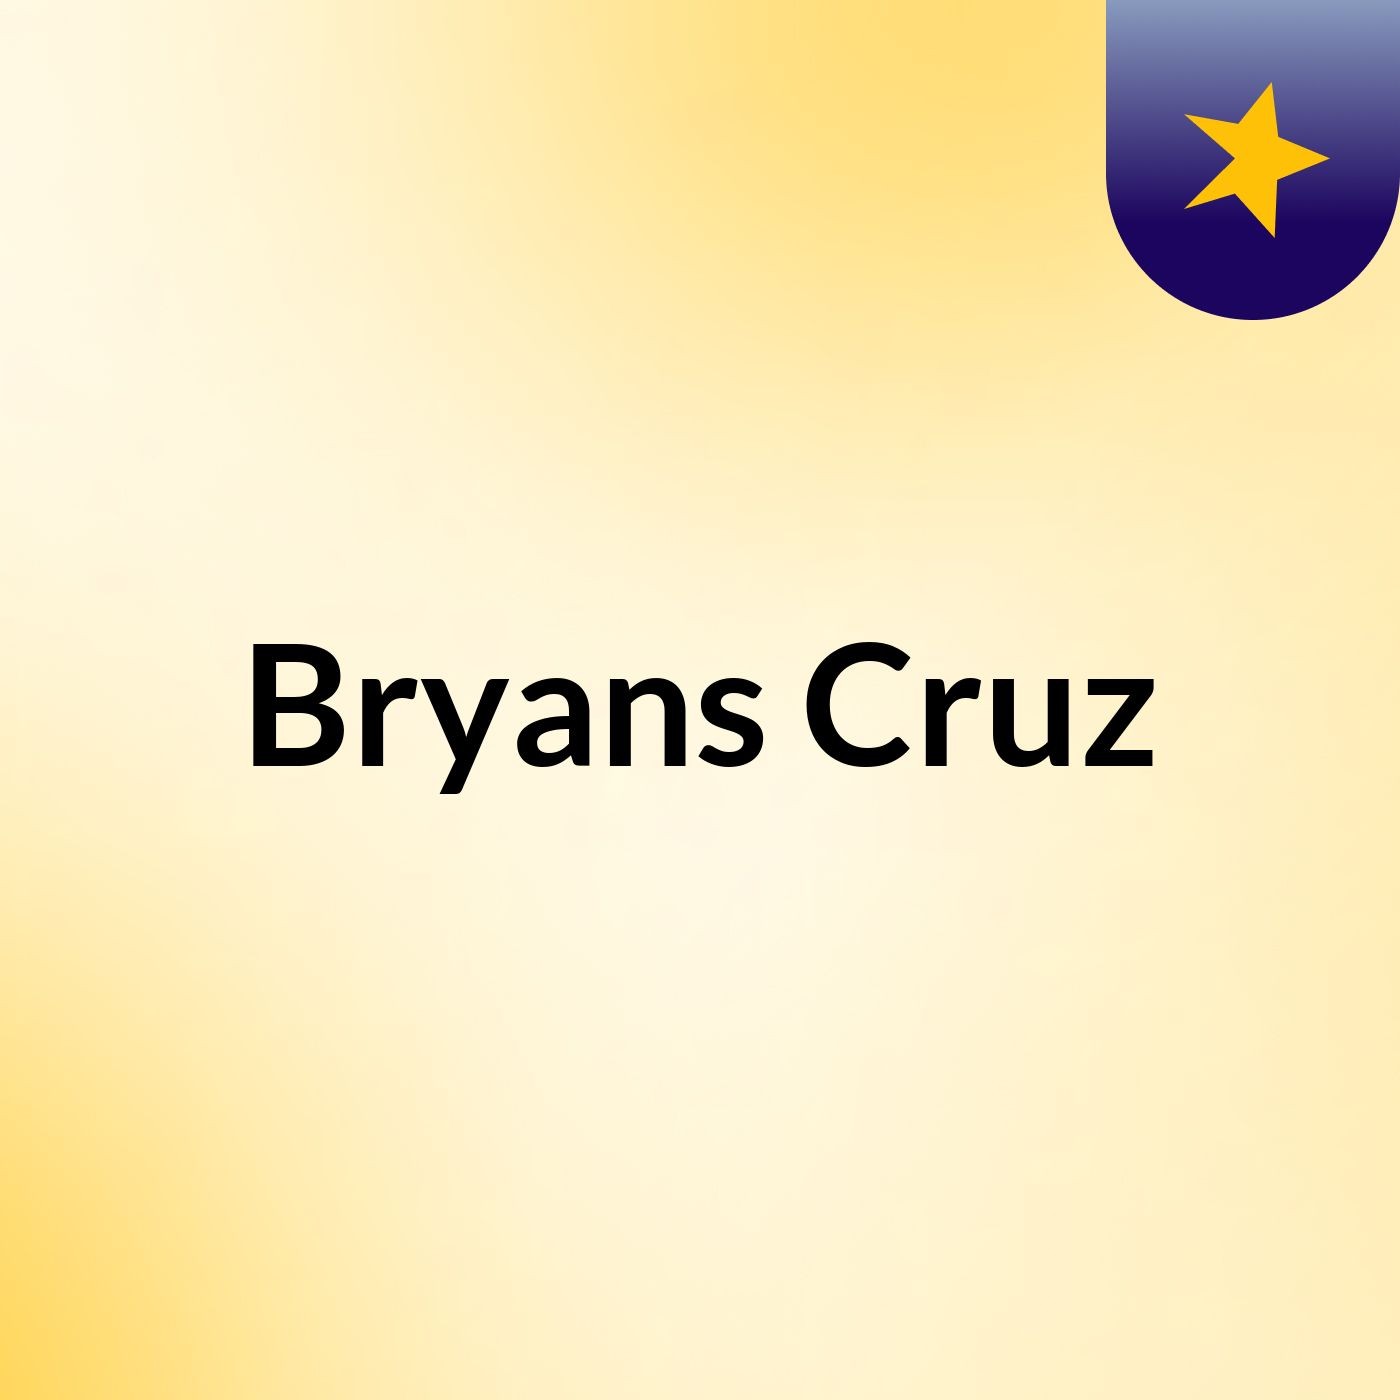 Bryans Cruz